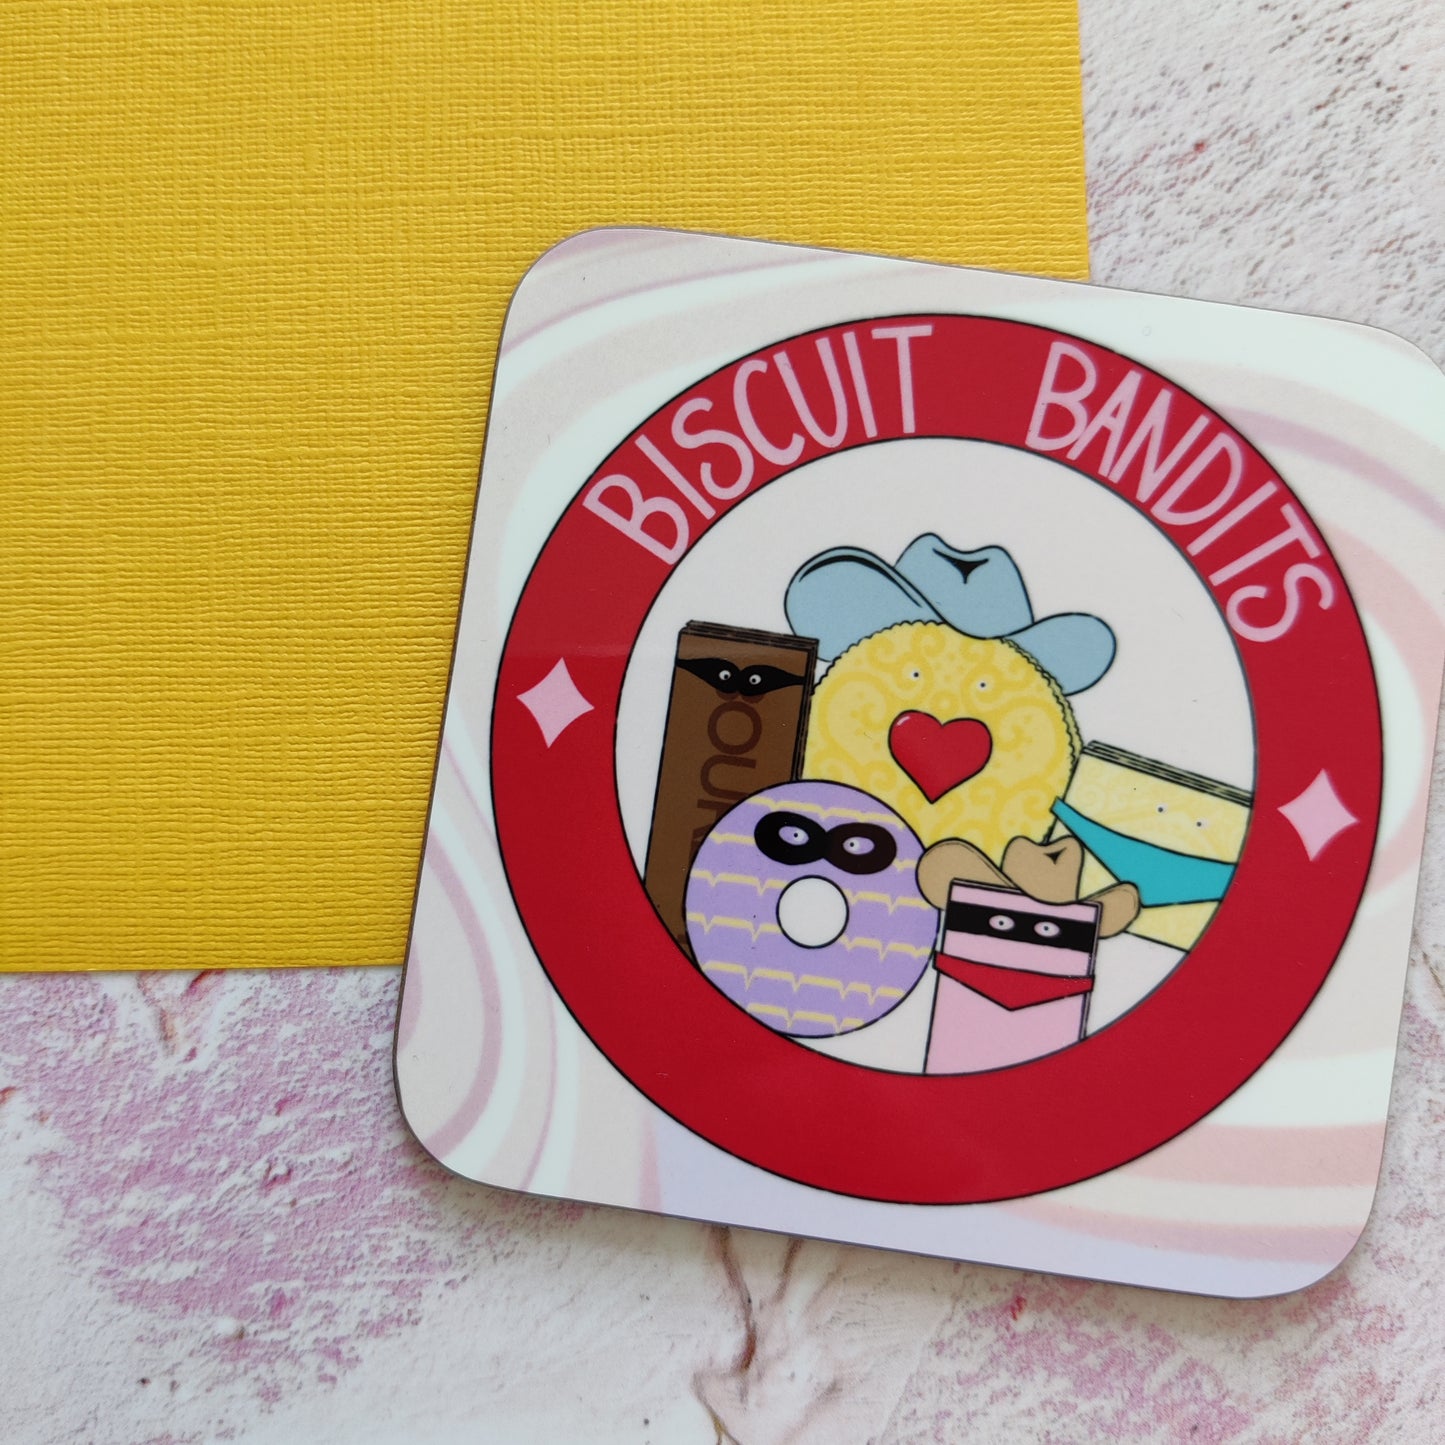 Biscuit Bandits Square Coaster - Fay Dixon Design